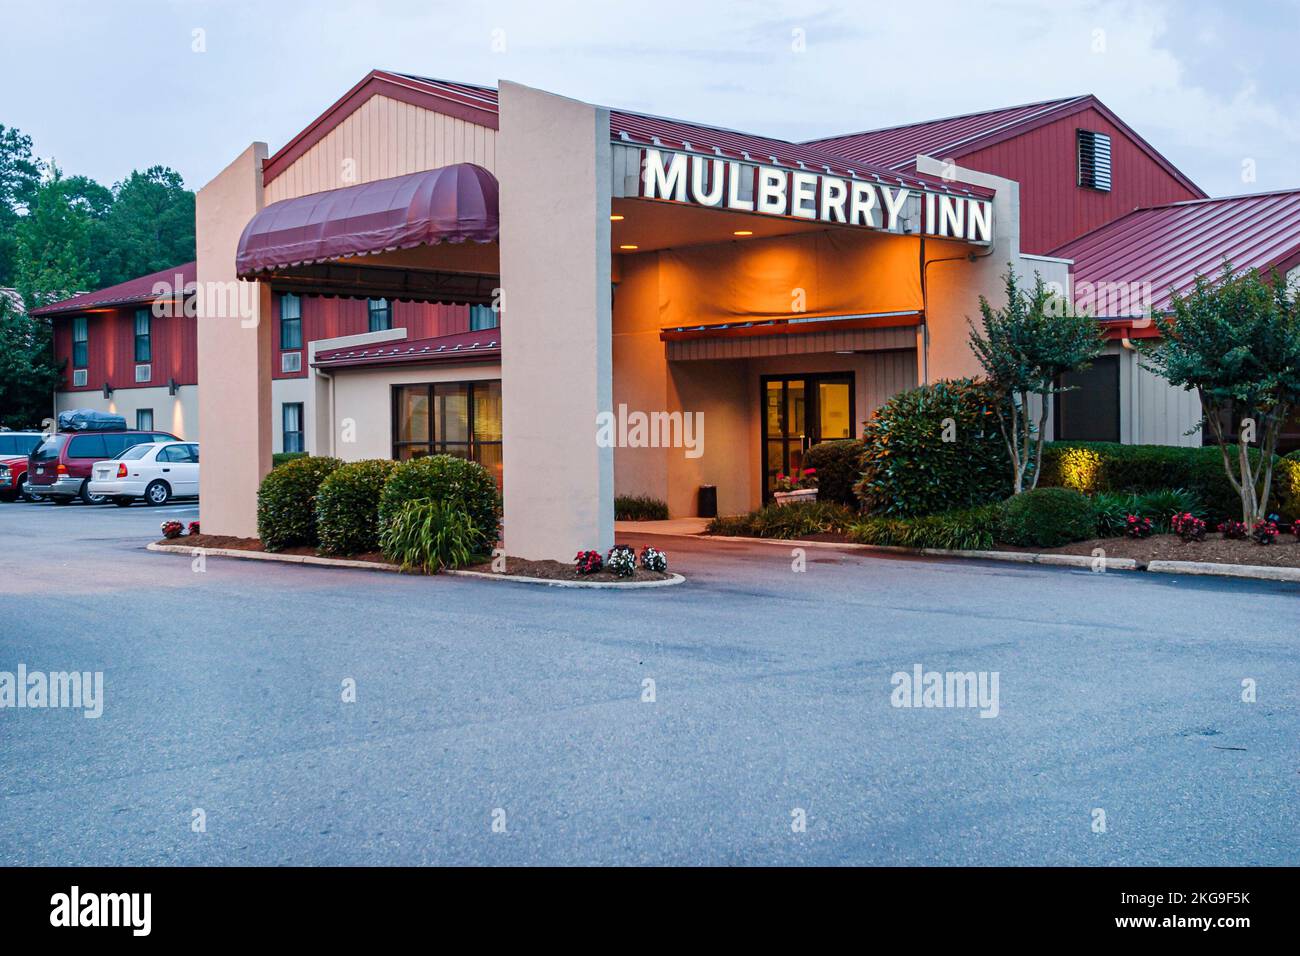 Newport News Virginia,Mulberry Inn,hotel hotels lodging inn motel motels,visitors travel traveling tour tourist tourism landmark landmarks culture cul Stock Photo